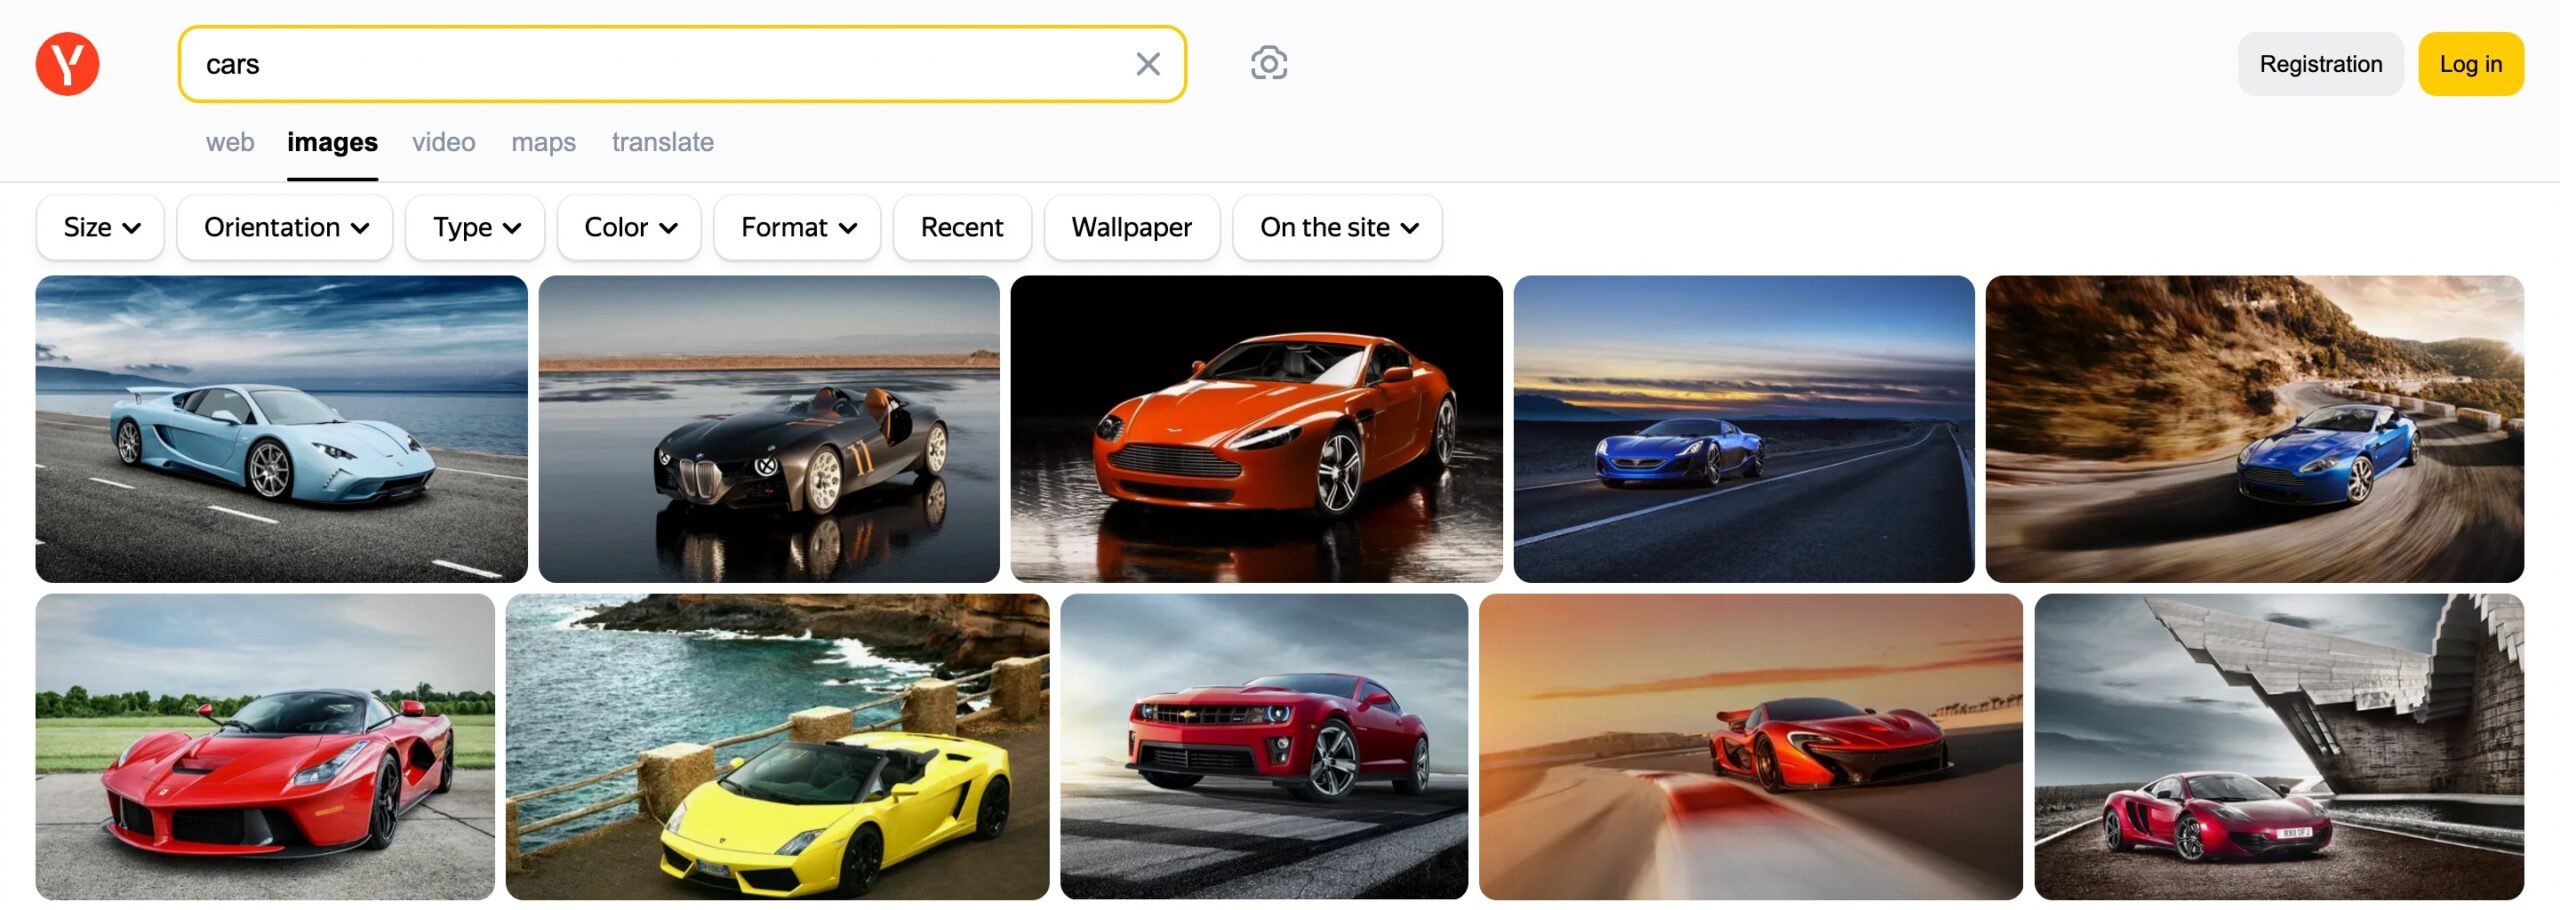 Yandex Image search